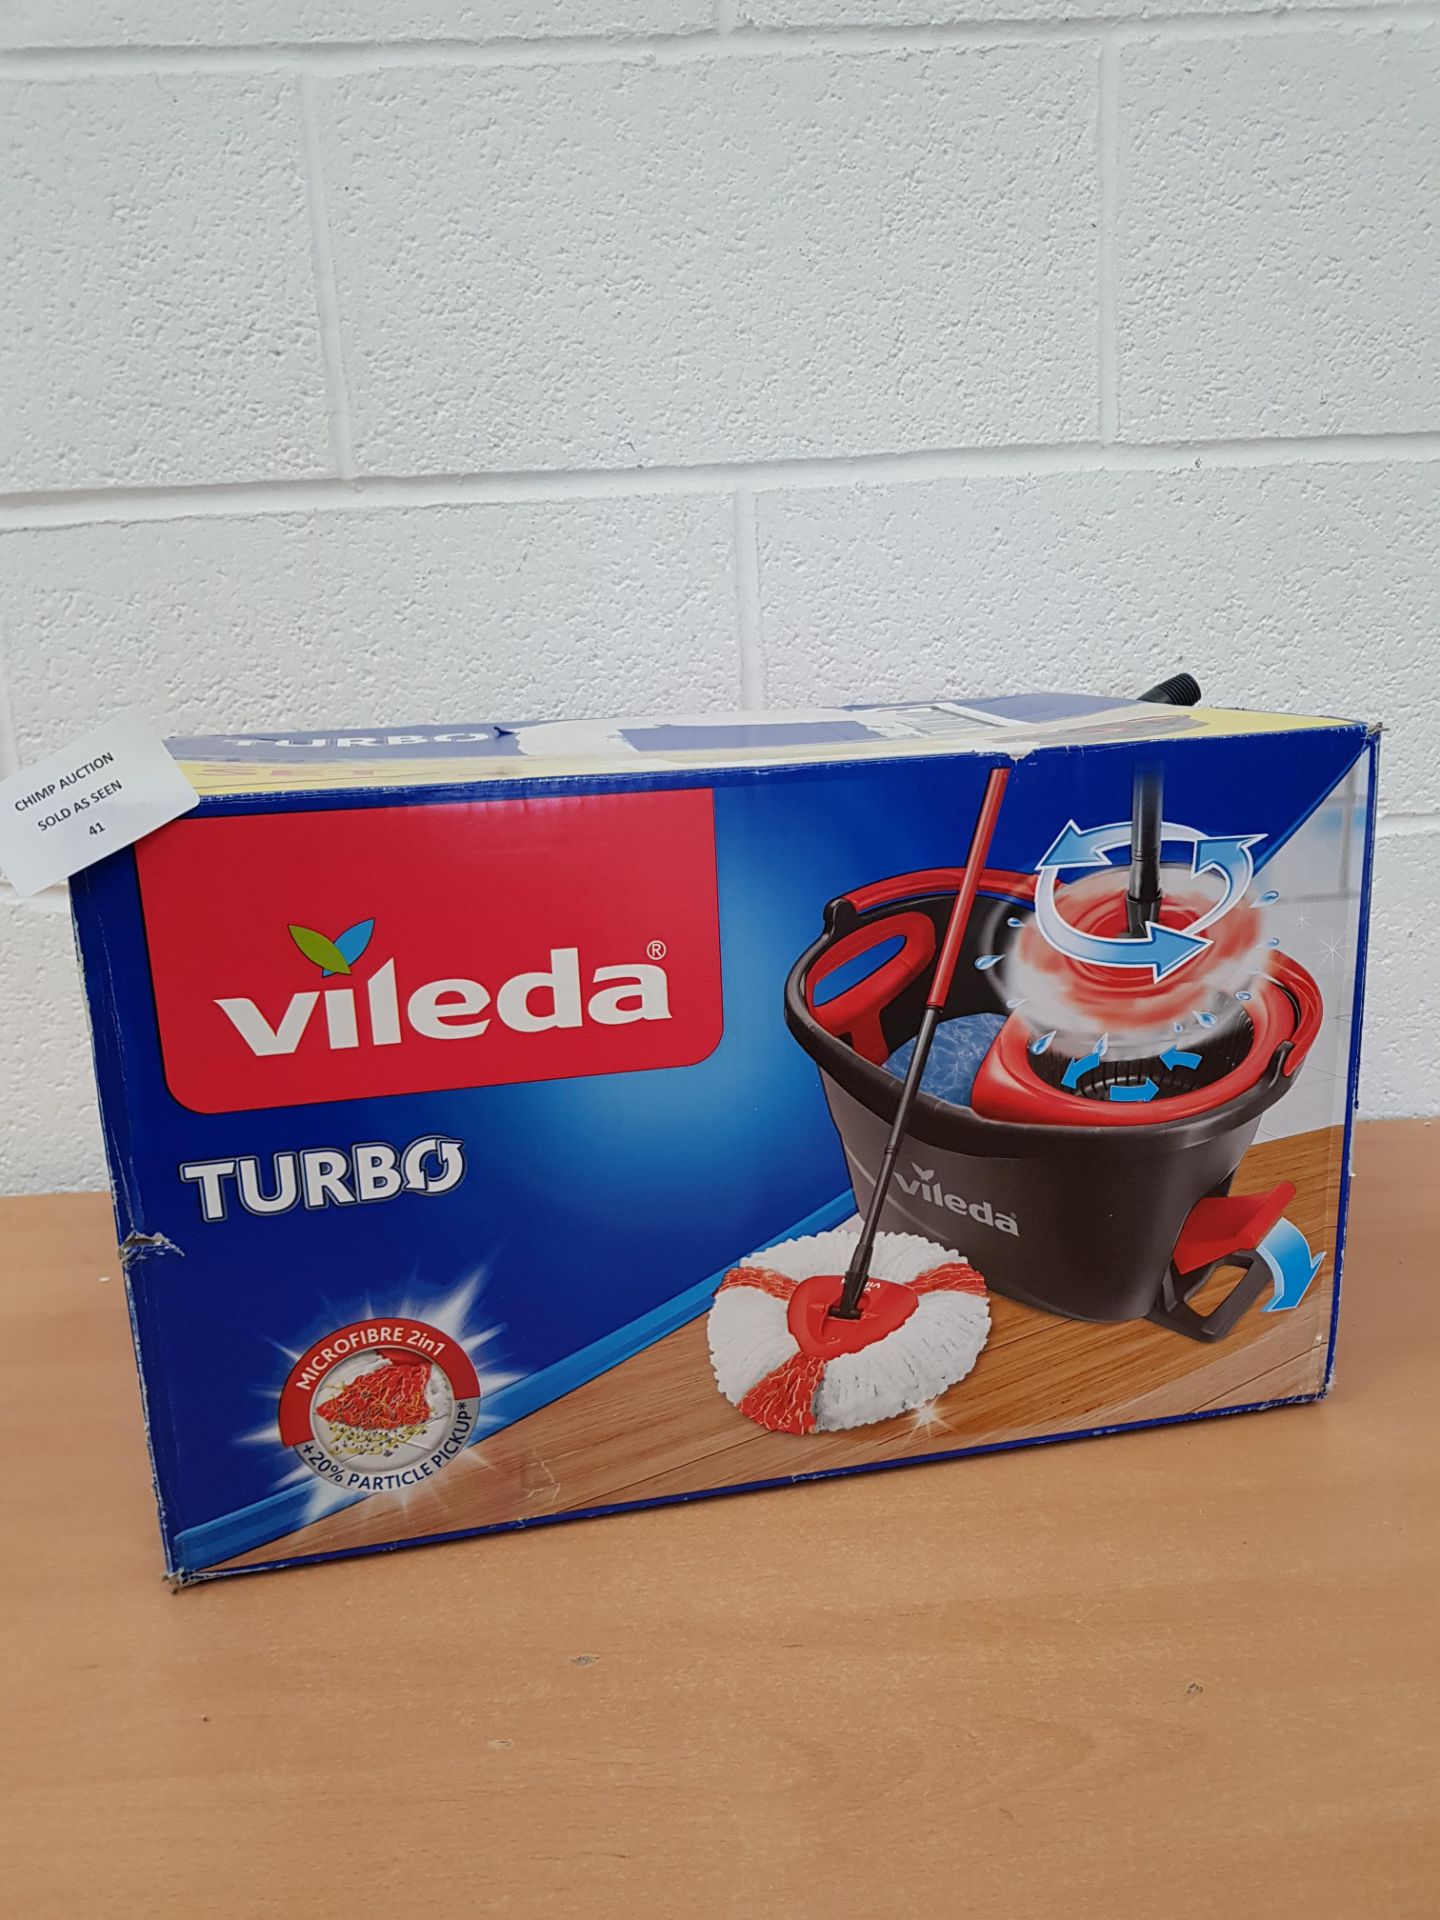 Vileda Turbo Cleaning System